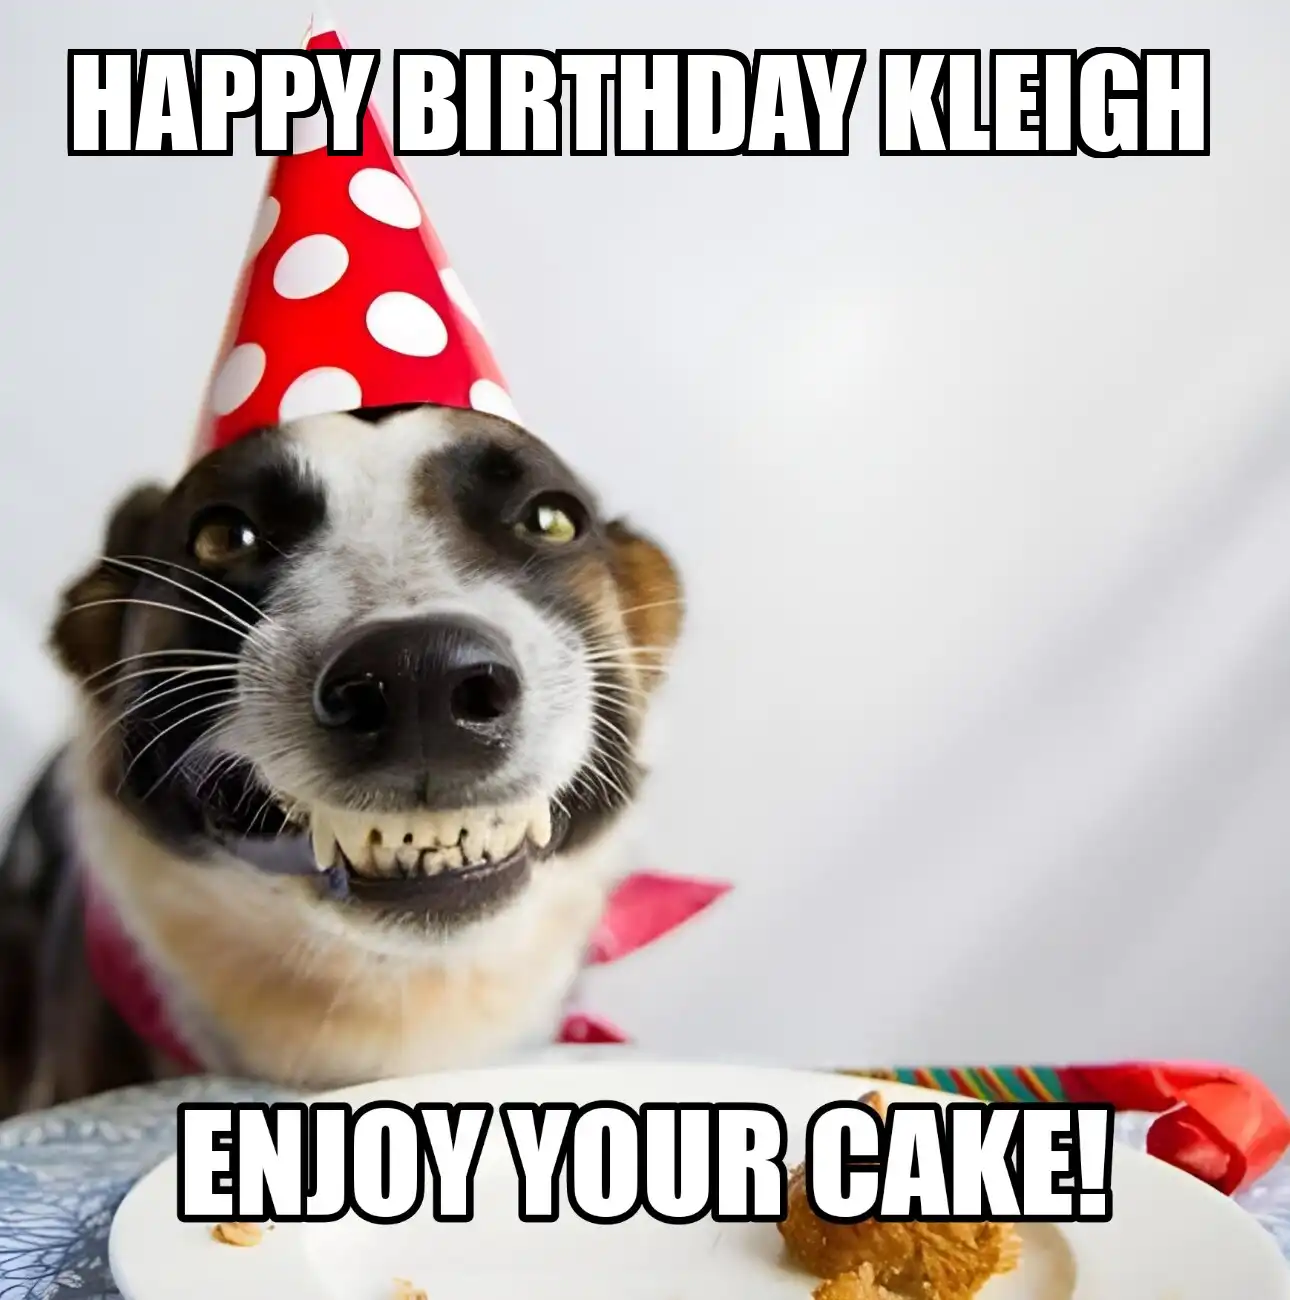 Happy Birthday Kleigh Enjoy Your Cake Dog Meme